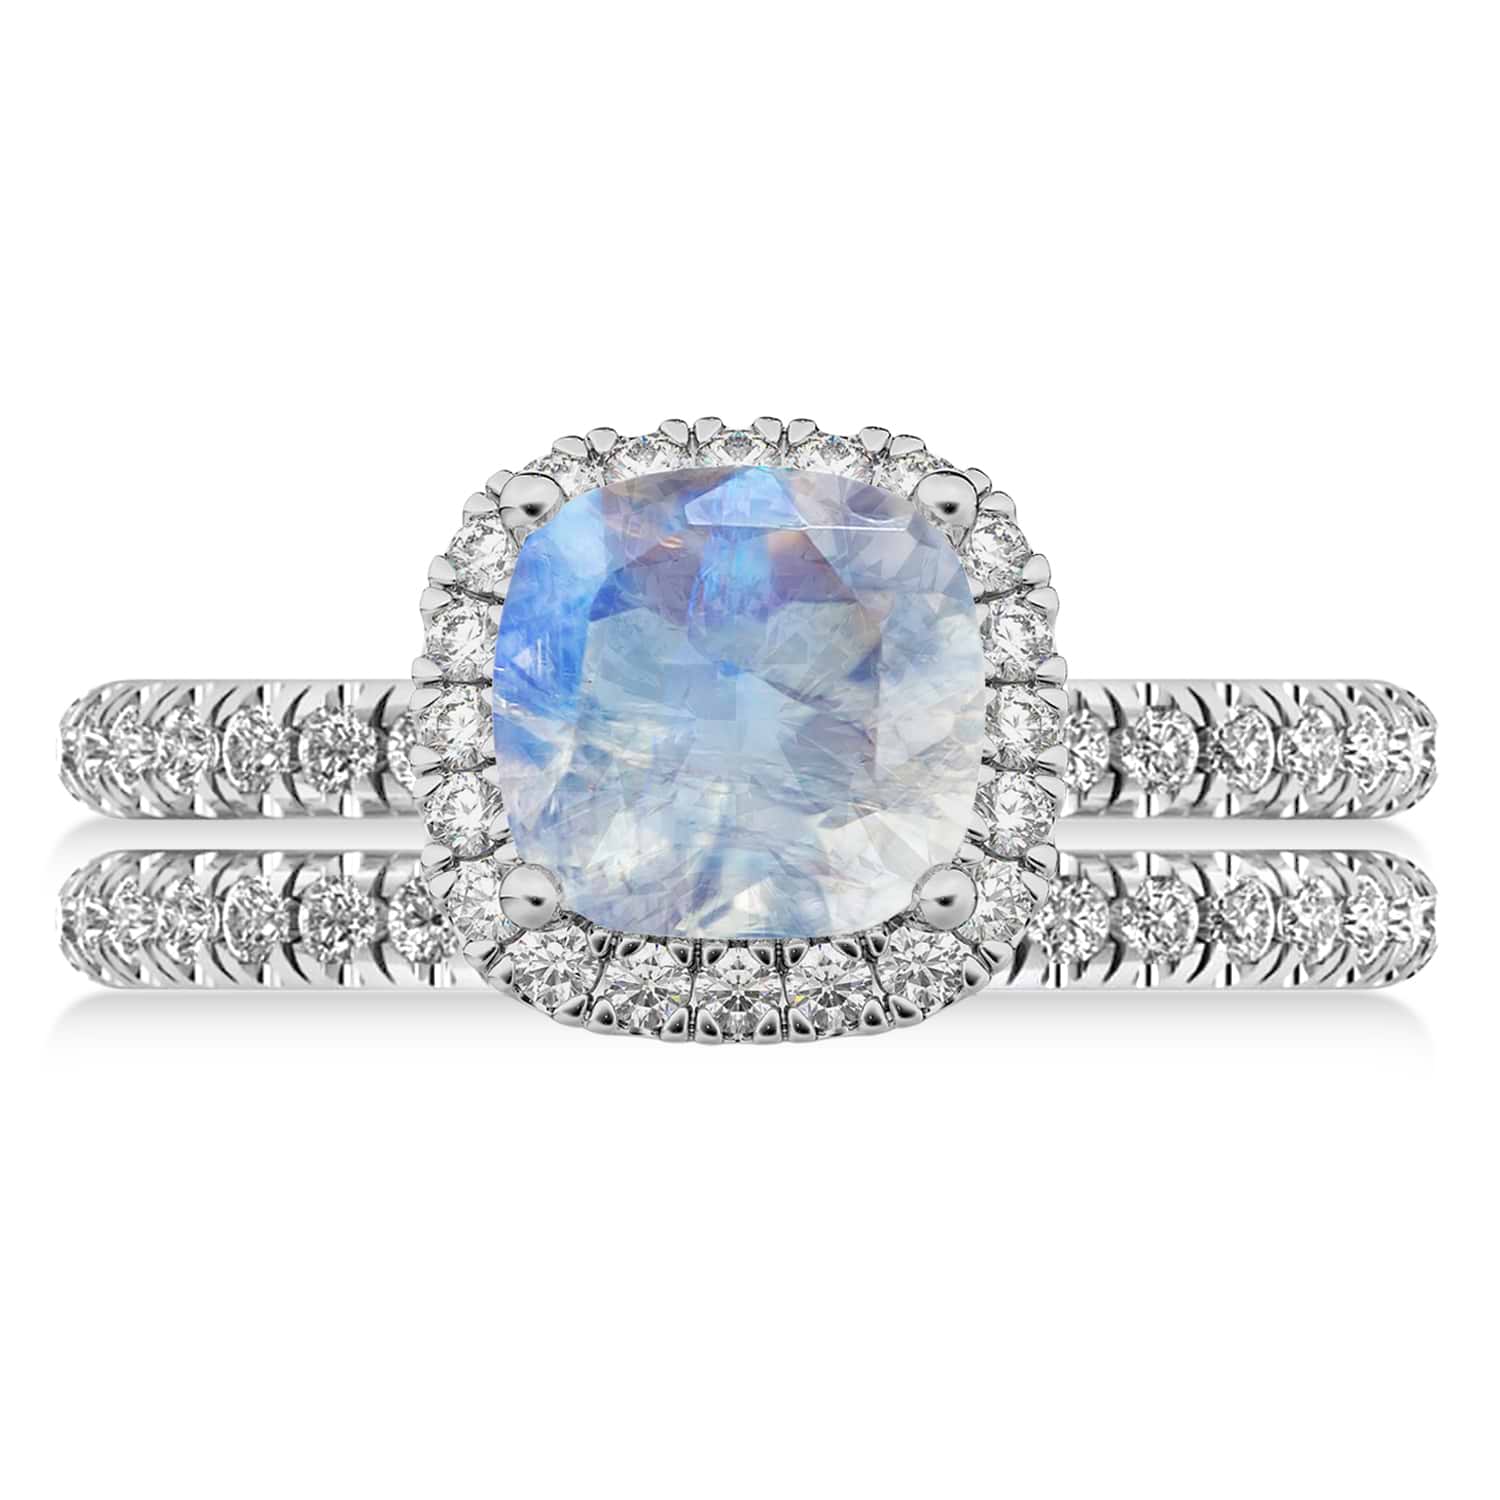 Moonstone & Diamonds Cushion-Cut Halo Bridal Set 14K White Gold (3.38ct)